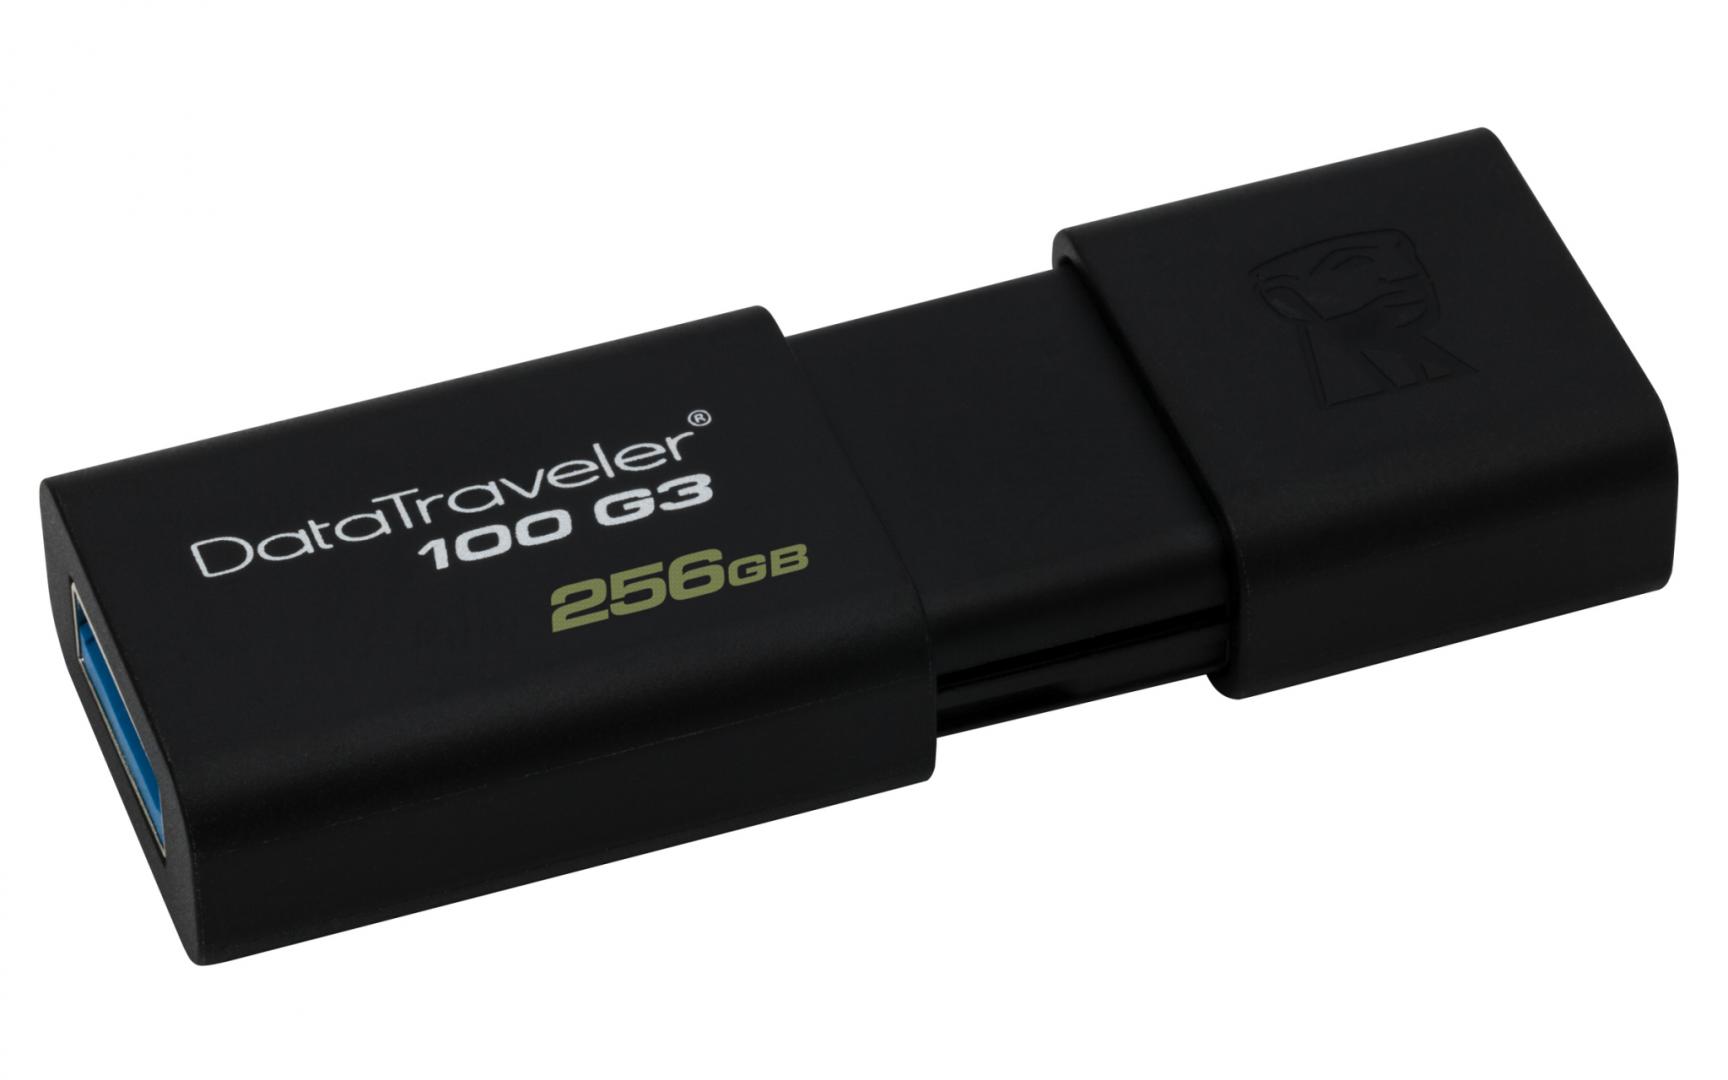 Memorie USB Flash Drive Kingston 256 GB DataTraveler D100G3, USB 3.0